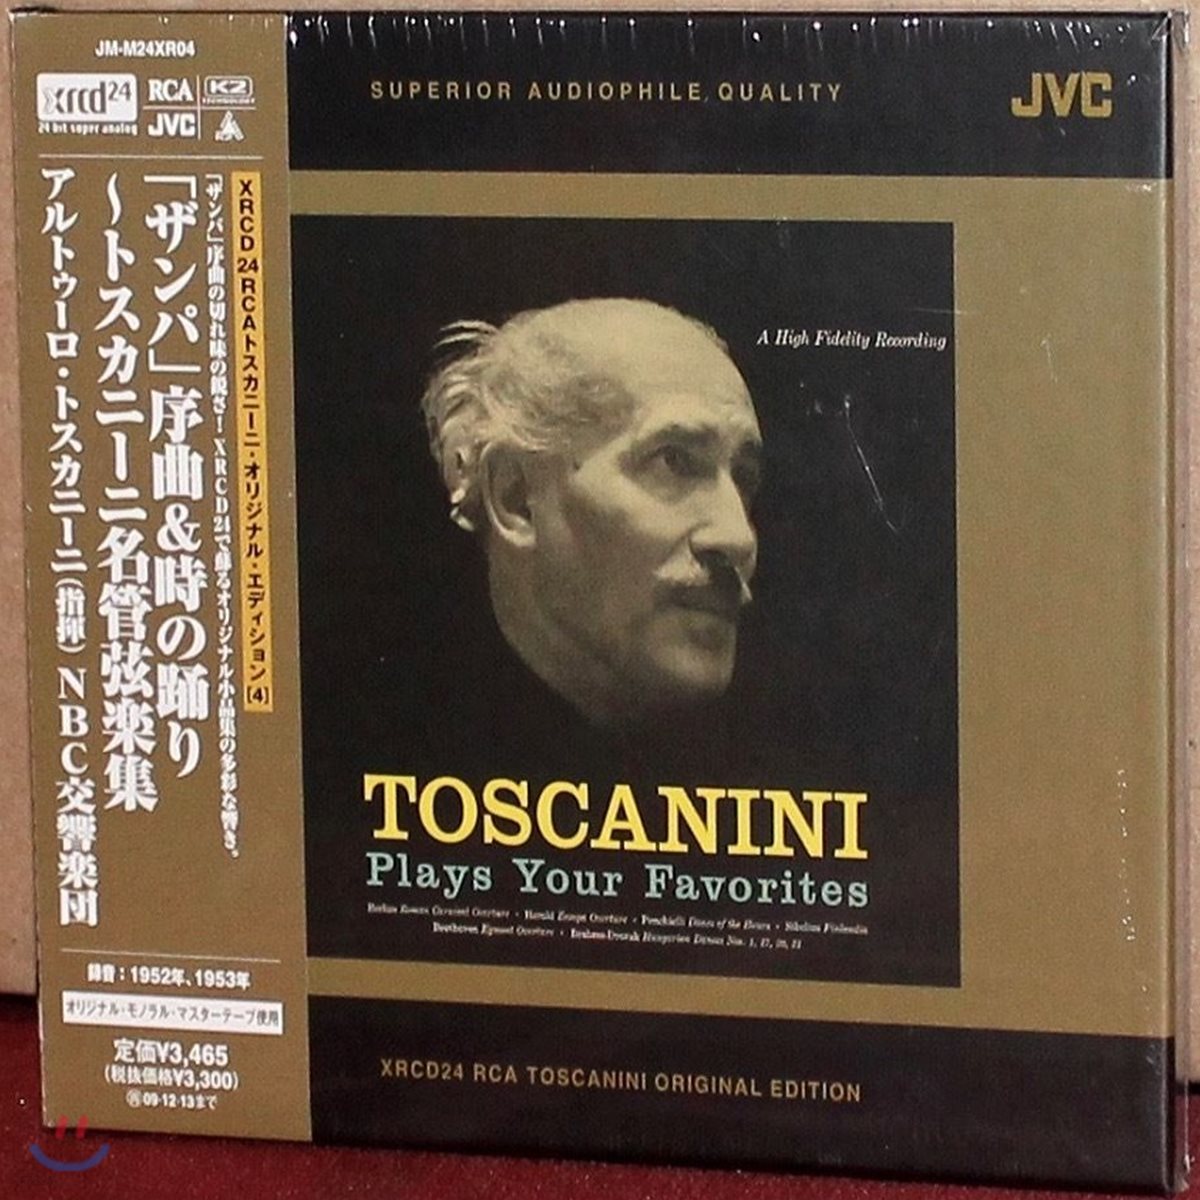 Arturo Toscanini 아스투르 토스카니 - 플레이스 유어 훼보리테스 (Plays Your Favorites)